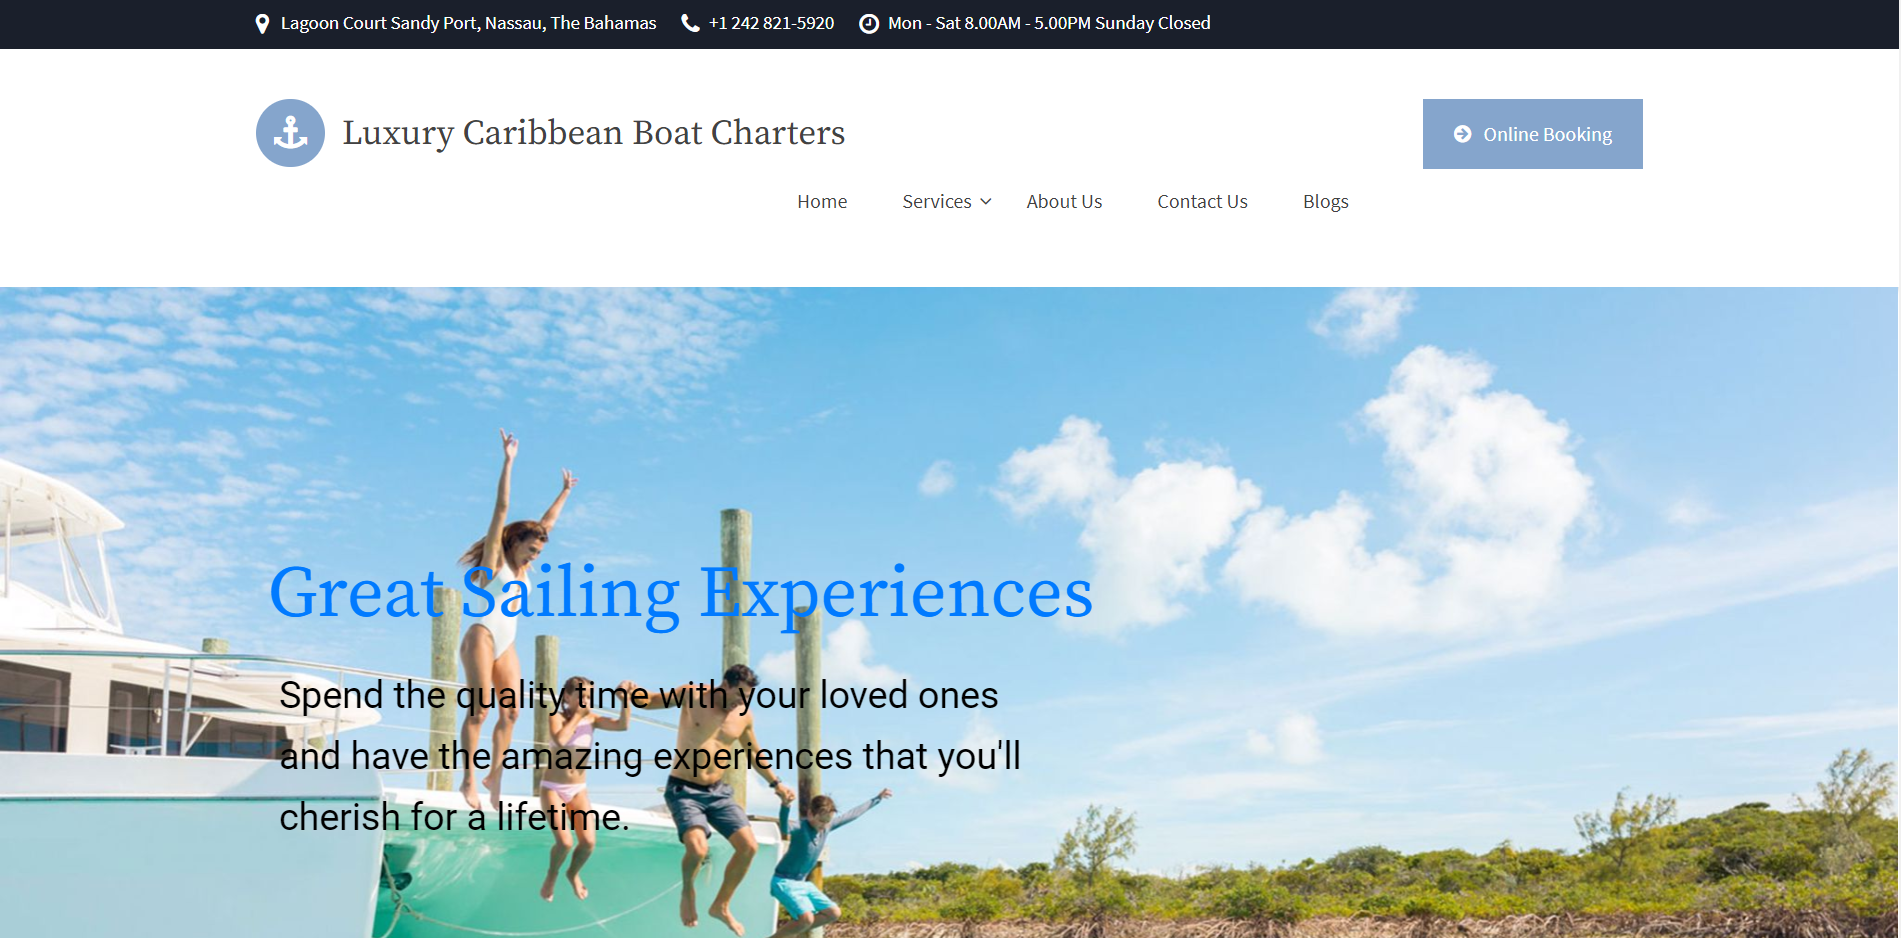 Luxury Caribbean Boat Charters